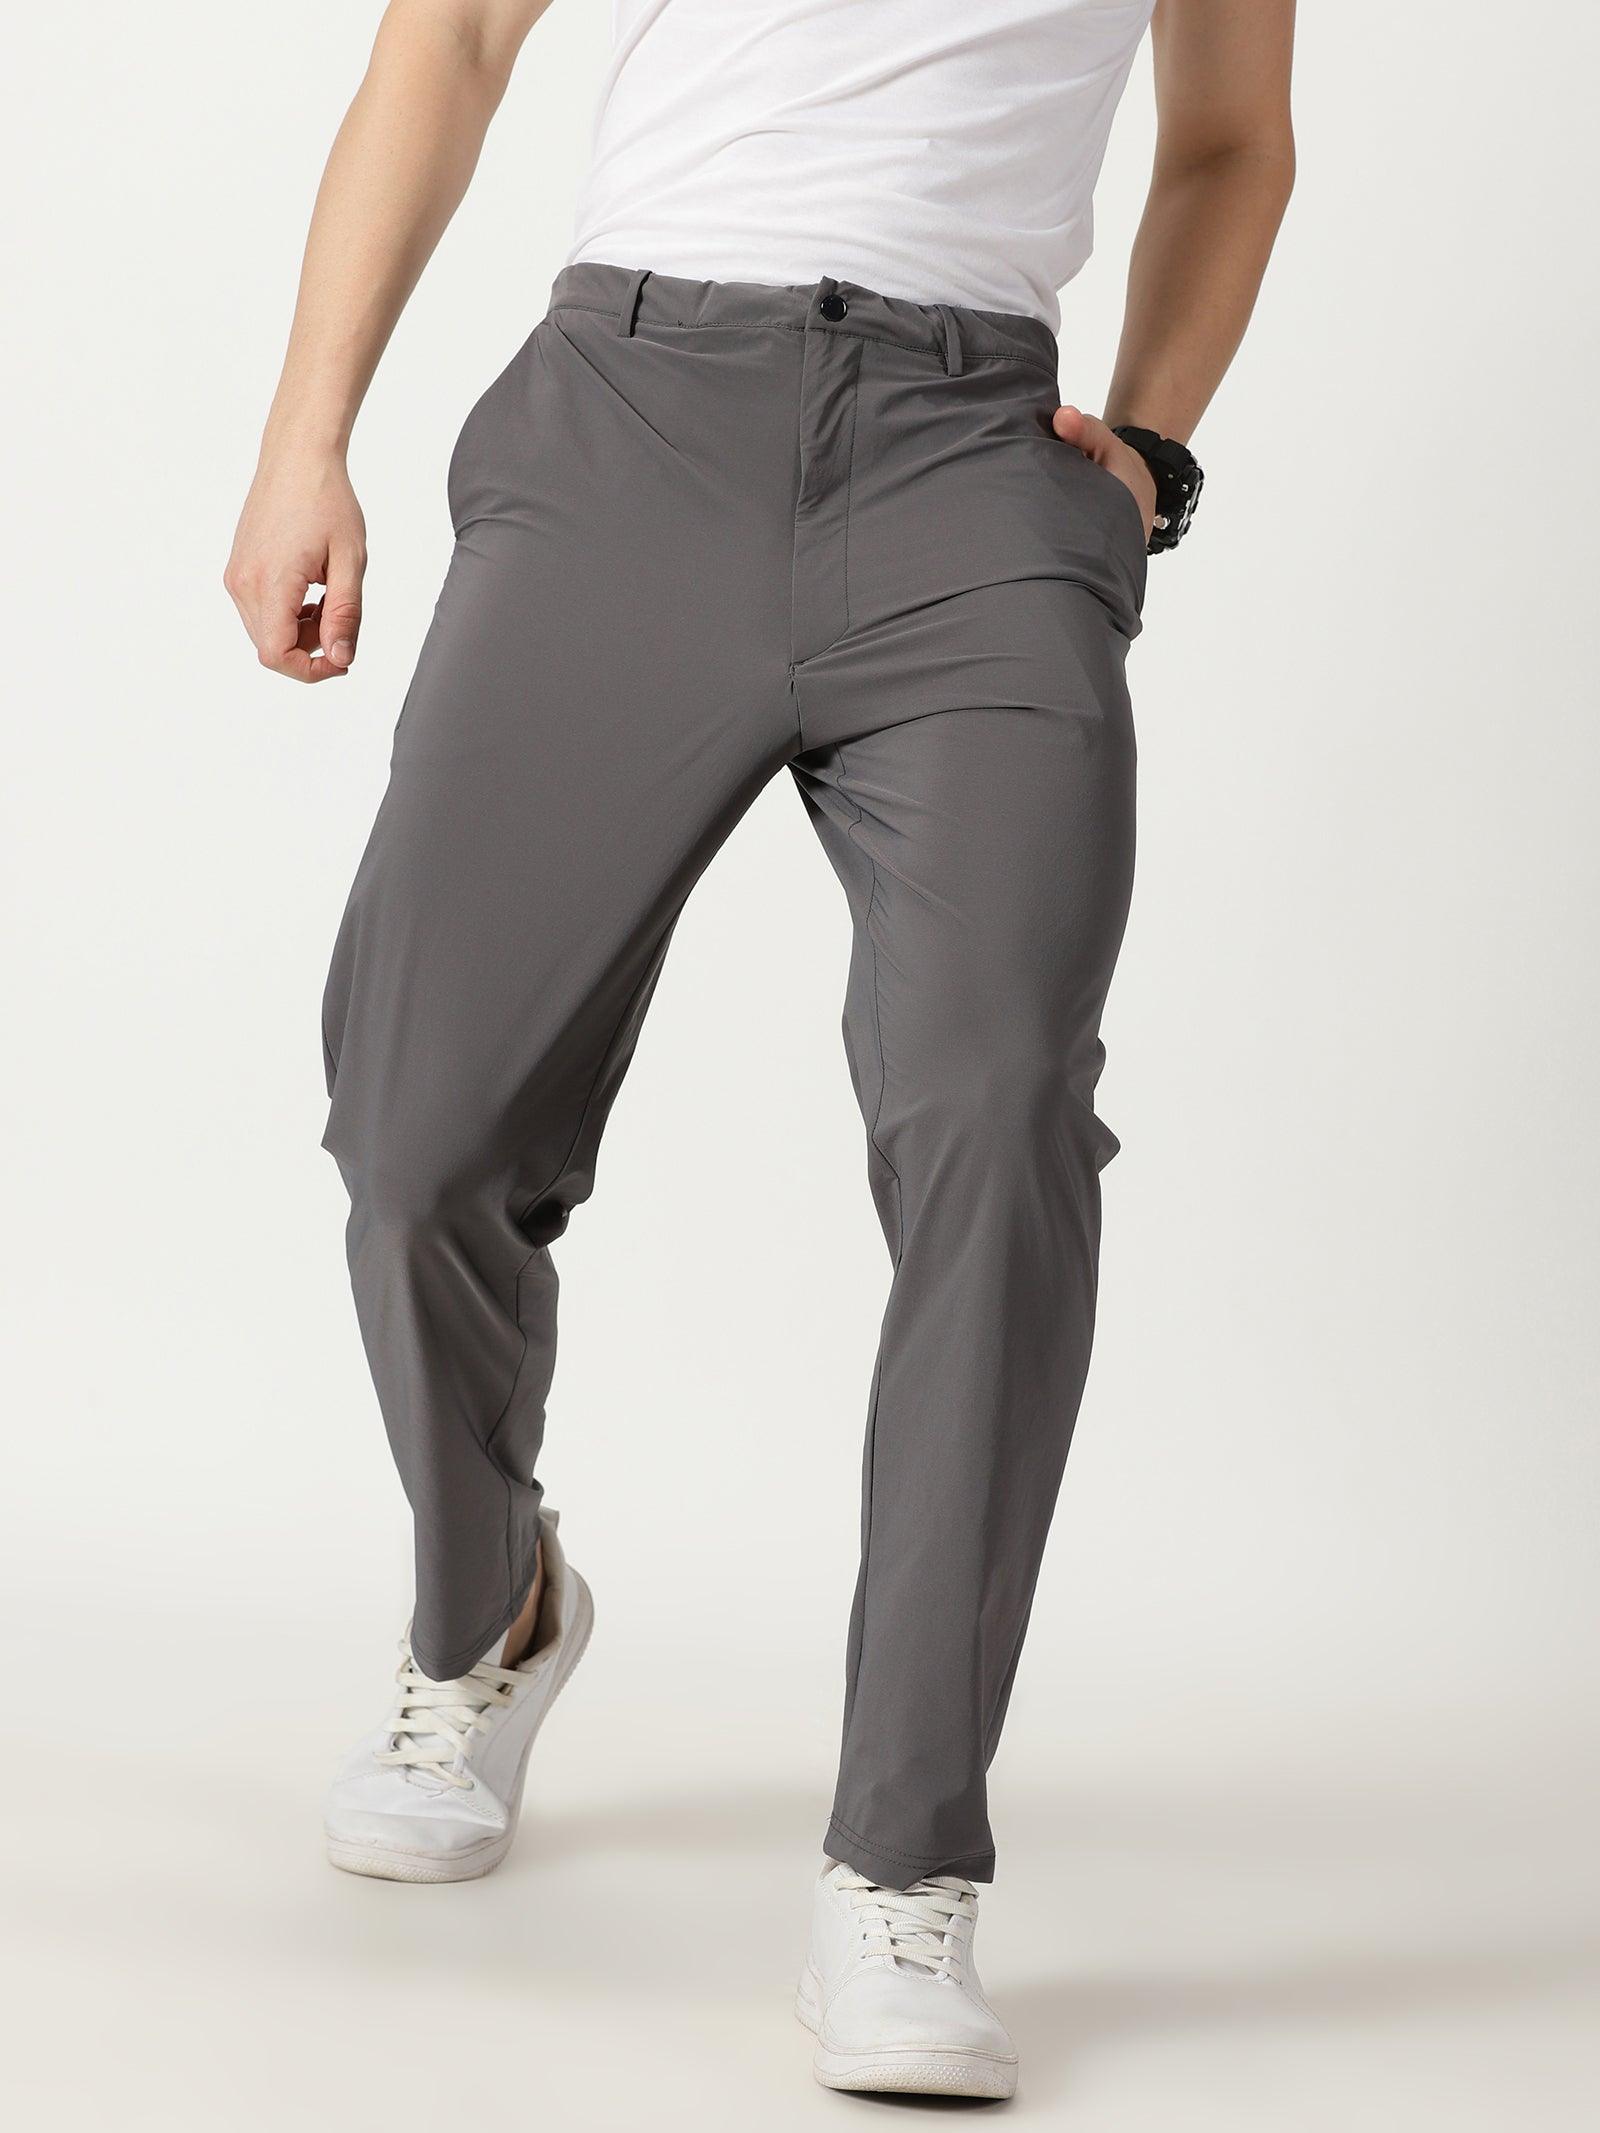 Express Slim Gray Houndstooth Dress Pant | Grey dress pants outfit, Men  casual, Grey dress pants men